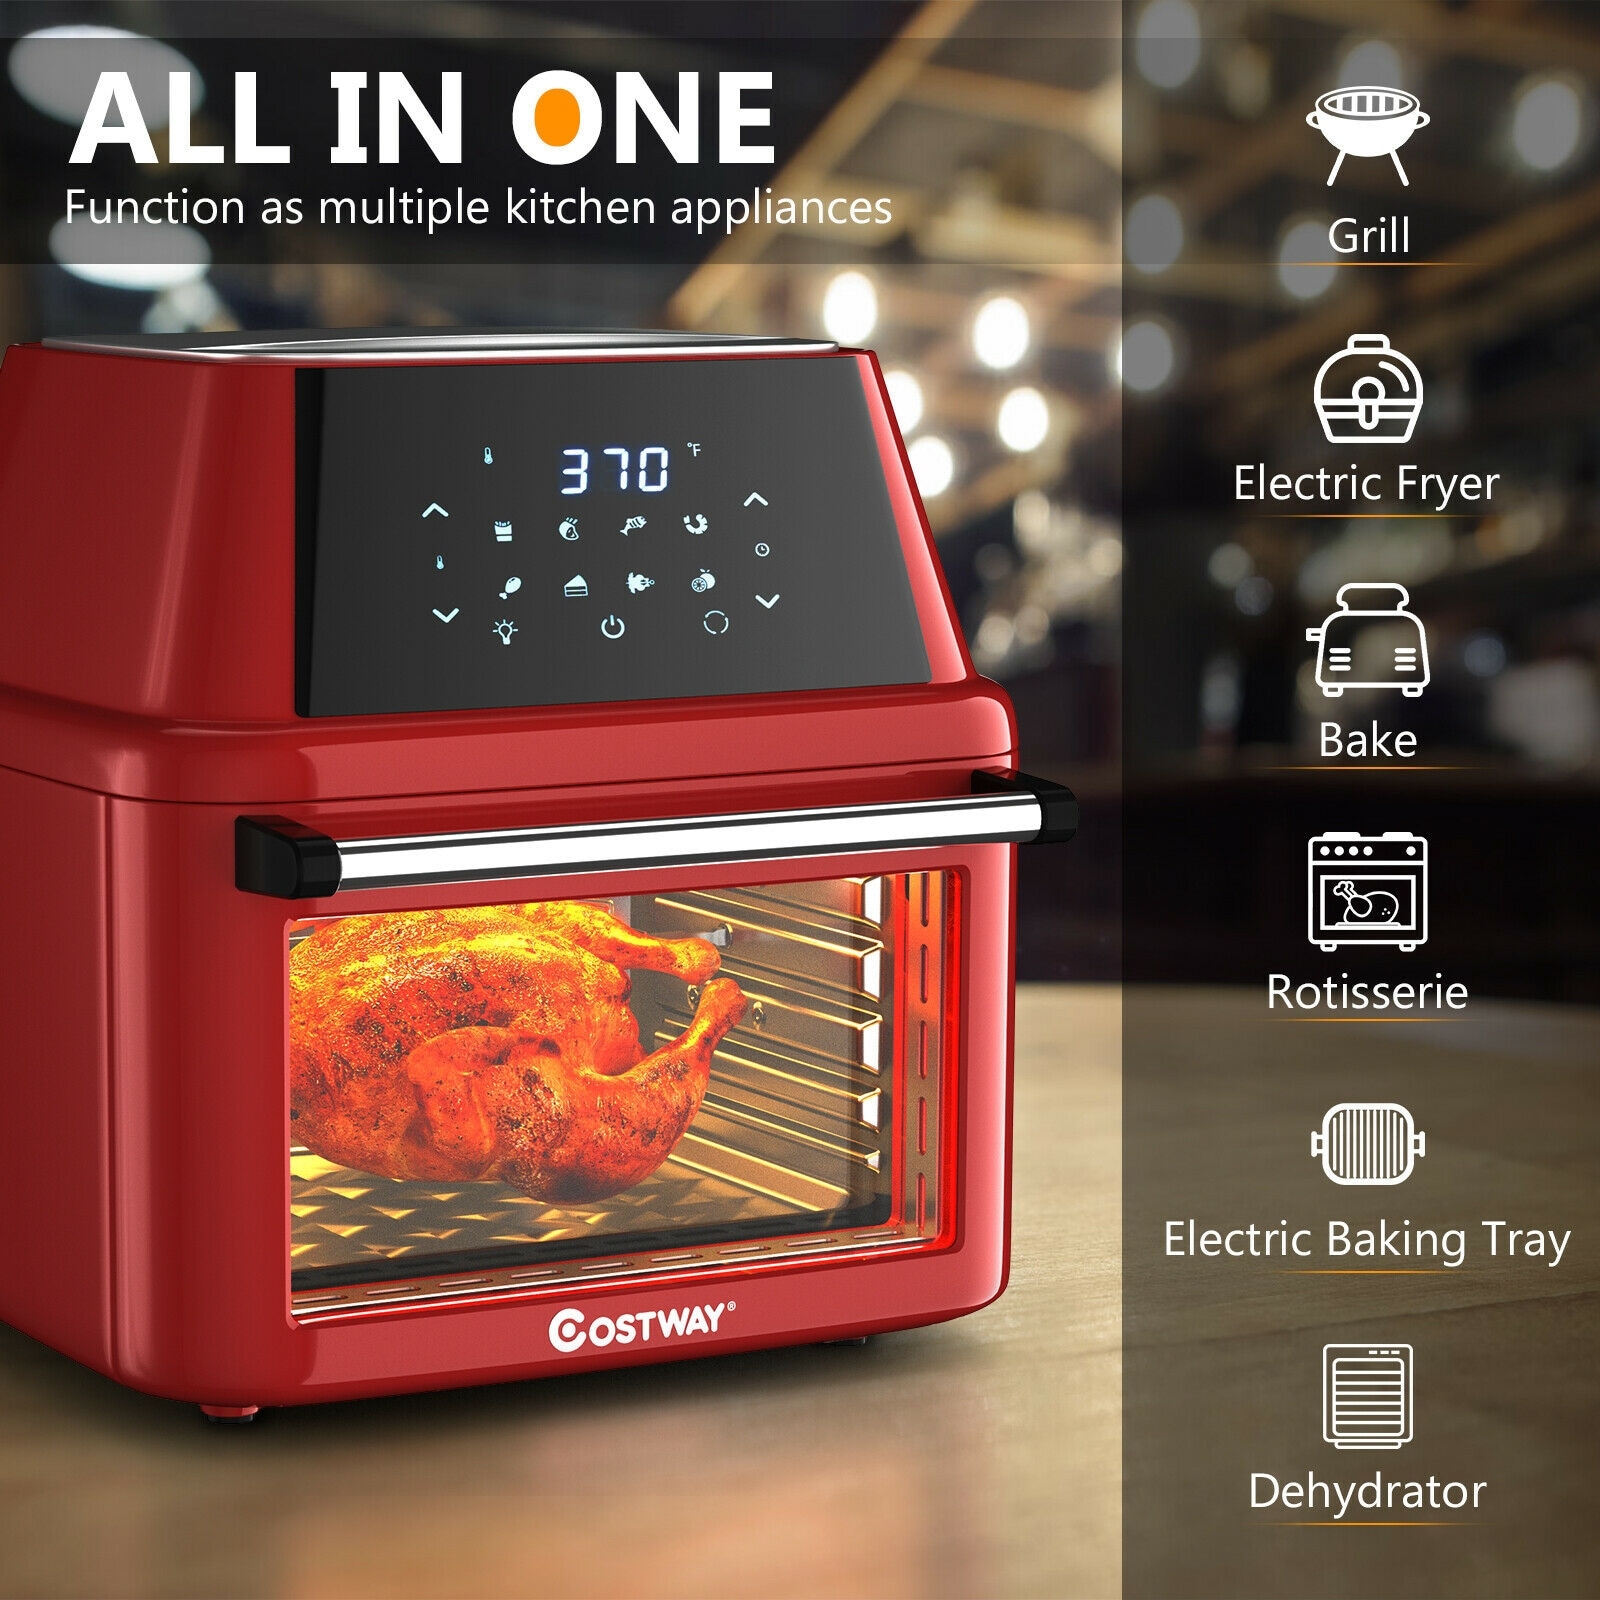 Saki Smart Air Fryer Oven XL13 Quart, 9-in-1, Rotisserie, Dehydrator, Roast, Bake, Preheat, Recipes & Accessories Included, 1700W, ETL Listed, RA